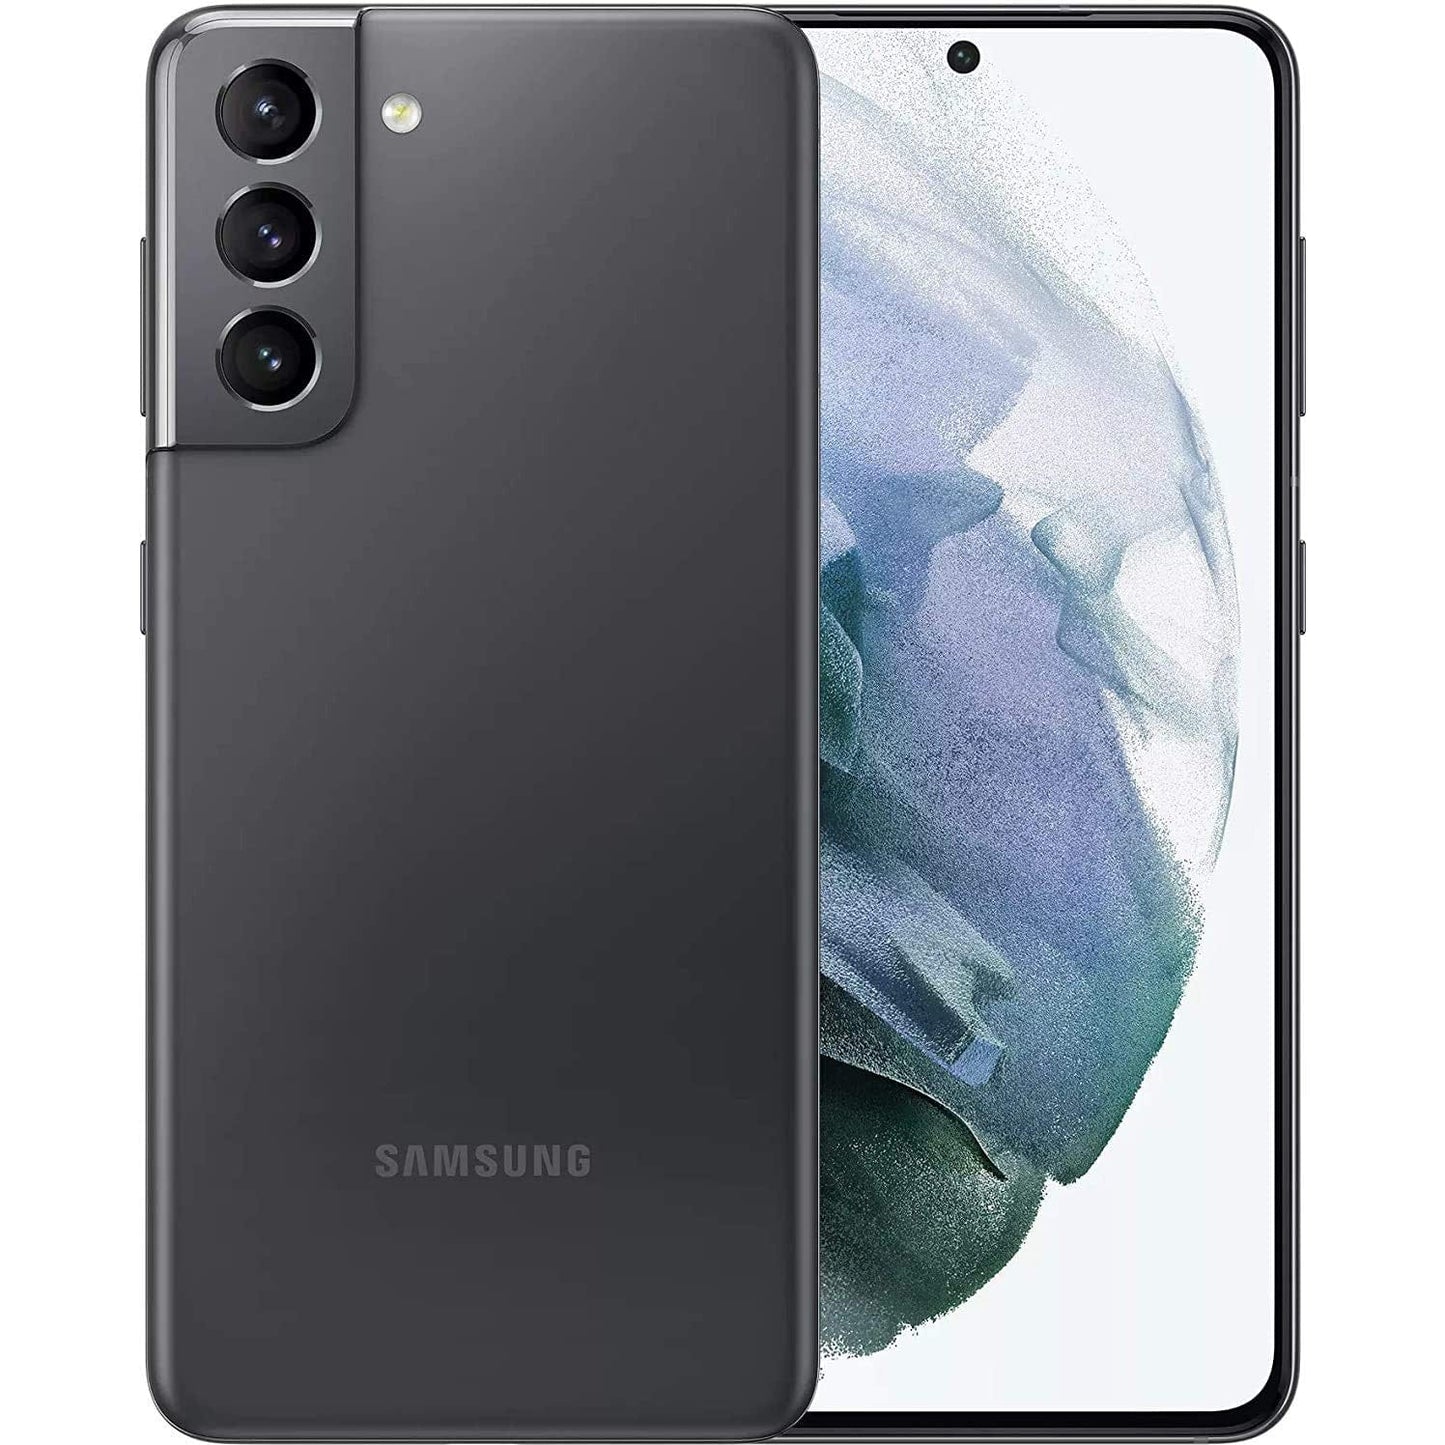 Samsung Galaxy S21 5G - 128 GB - Phantom Gray - T-Mobile - GSM